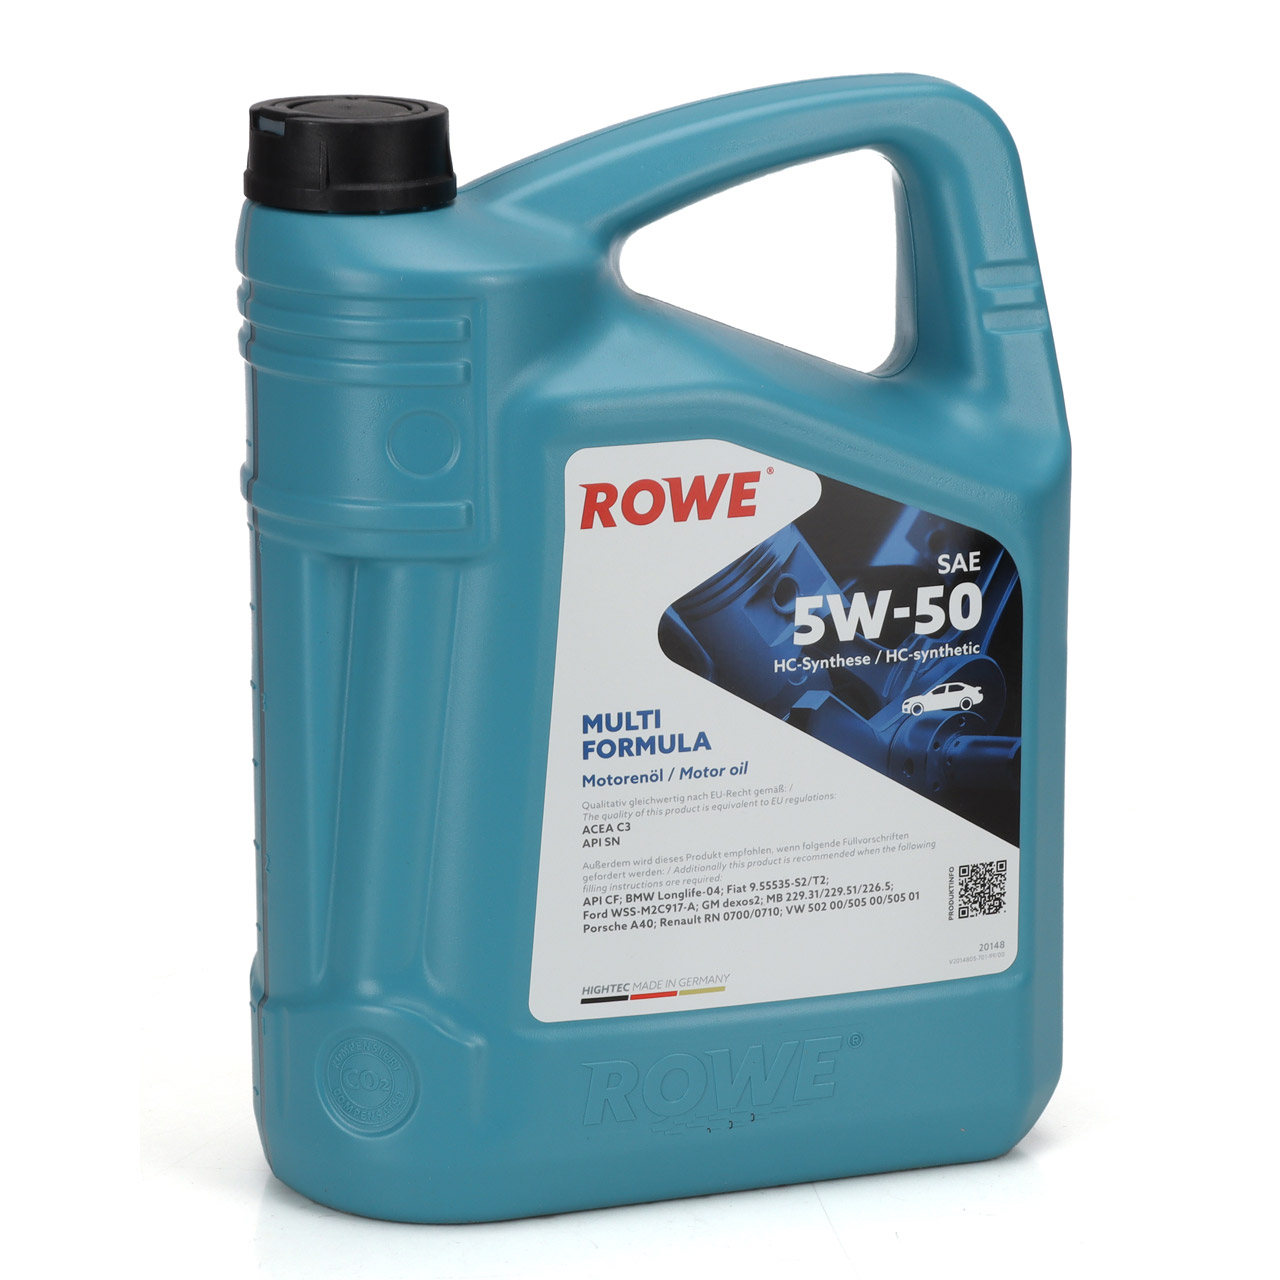 6L 6 Liter ROWE MULTI FORMULA 5W-50 Motoröl Öl ACEA C3 API SN BMW LL-04 VW 502/505.00